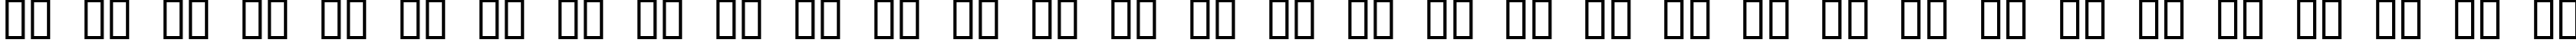 Пример написания русского алфавита шрифтом Brian James Condensed Bold